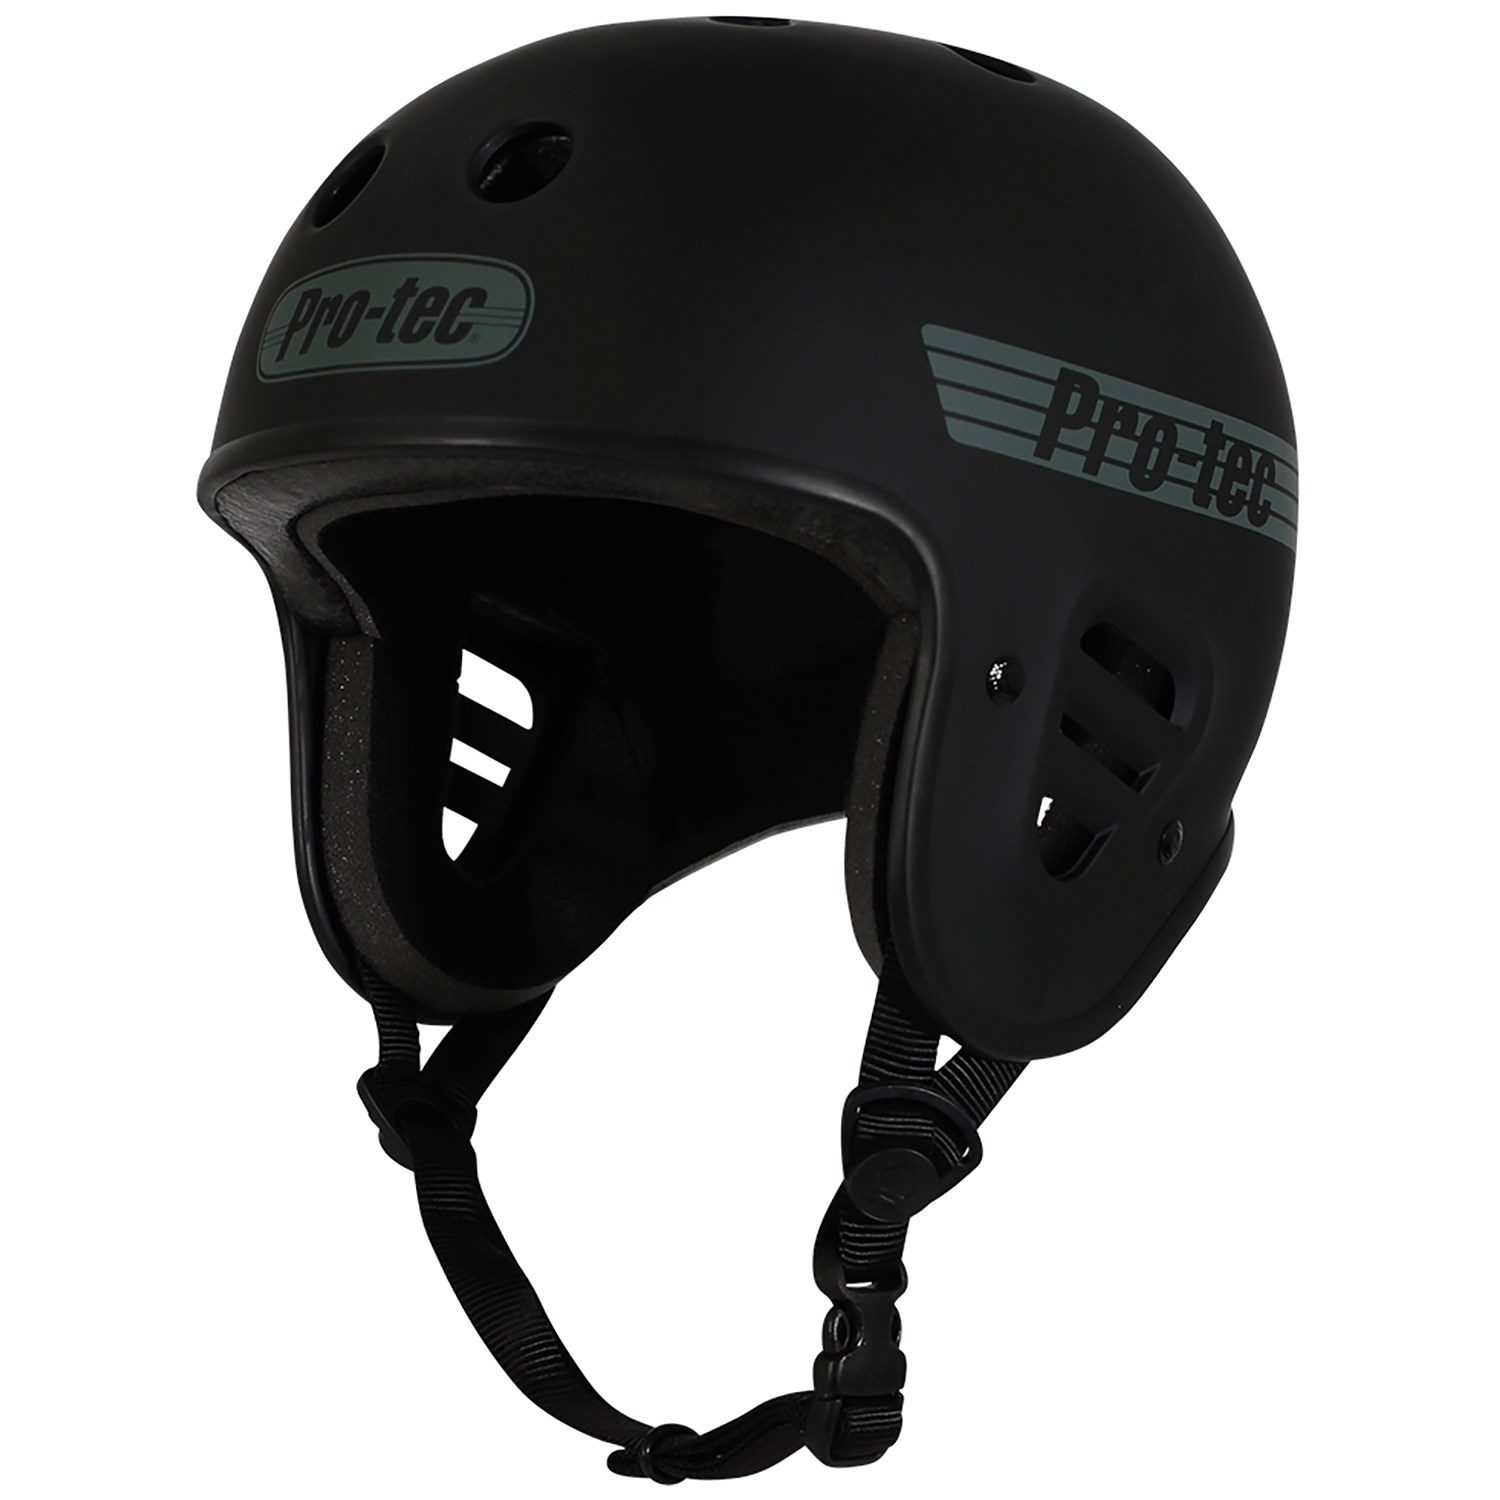 Pro-Tec Full Cut Skate Helmet 